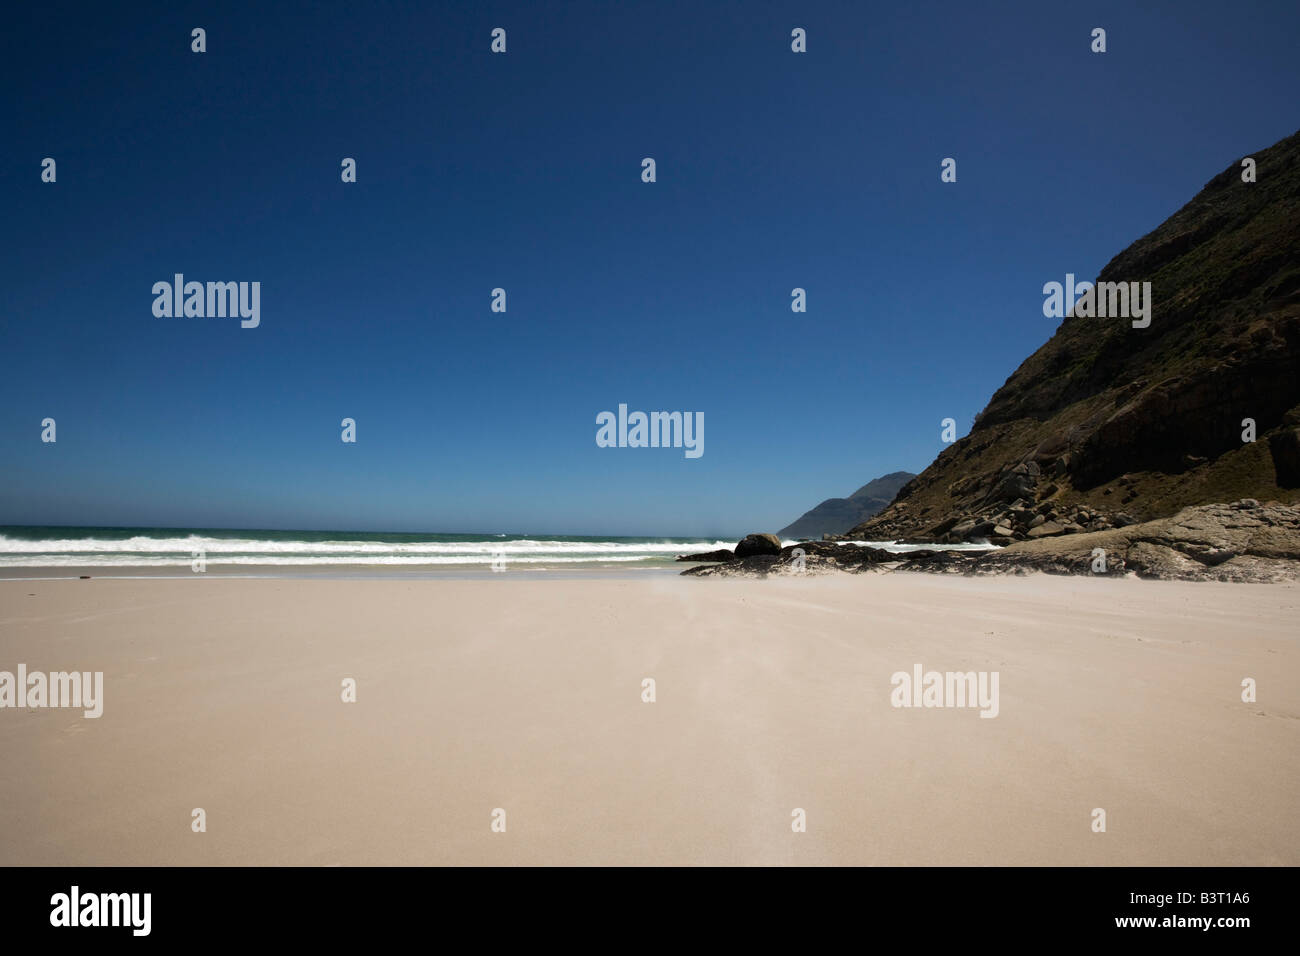 Spiaggia di sabbia, Noordhoek, Cape Town, Sud Africa Foto Stock